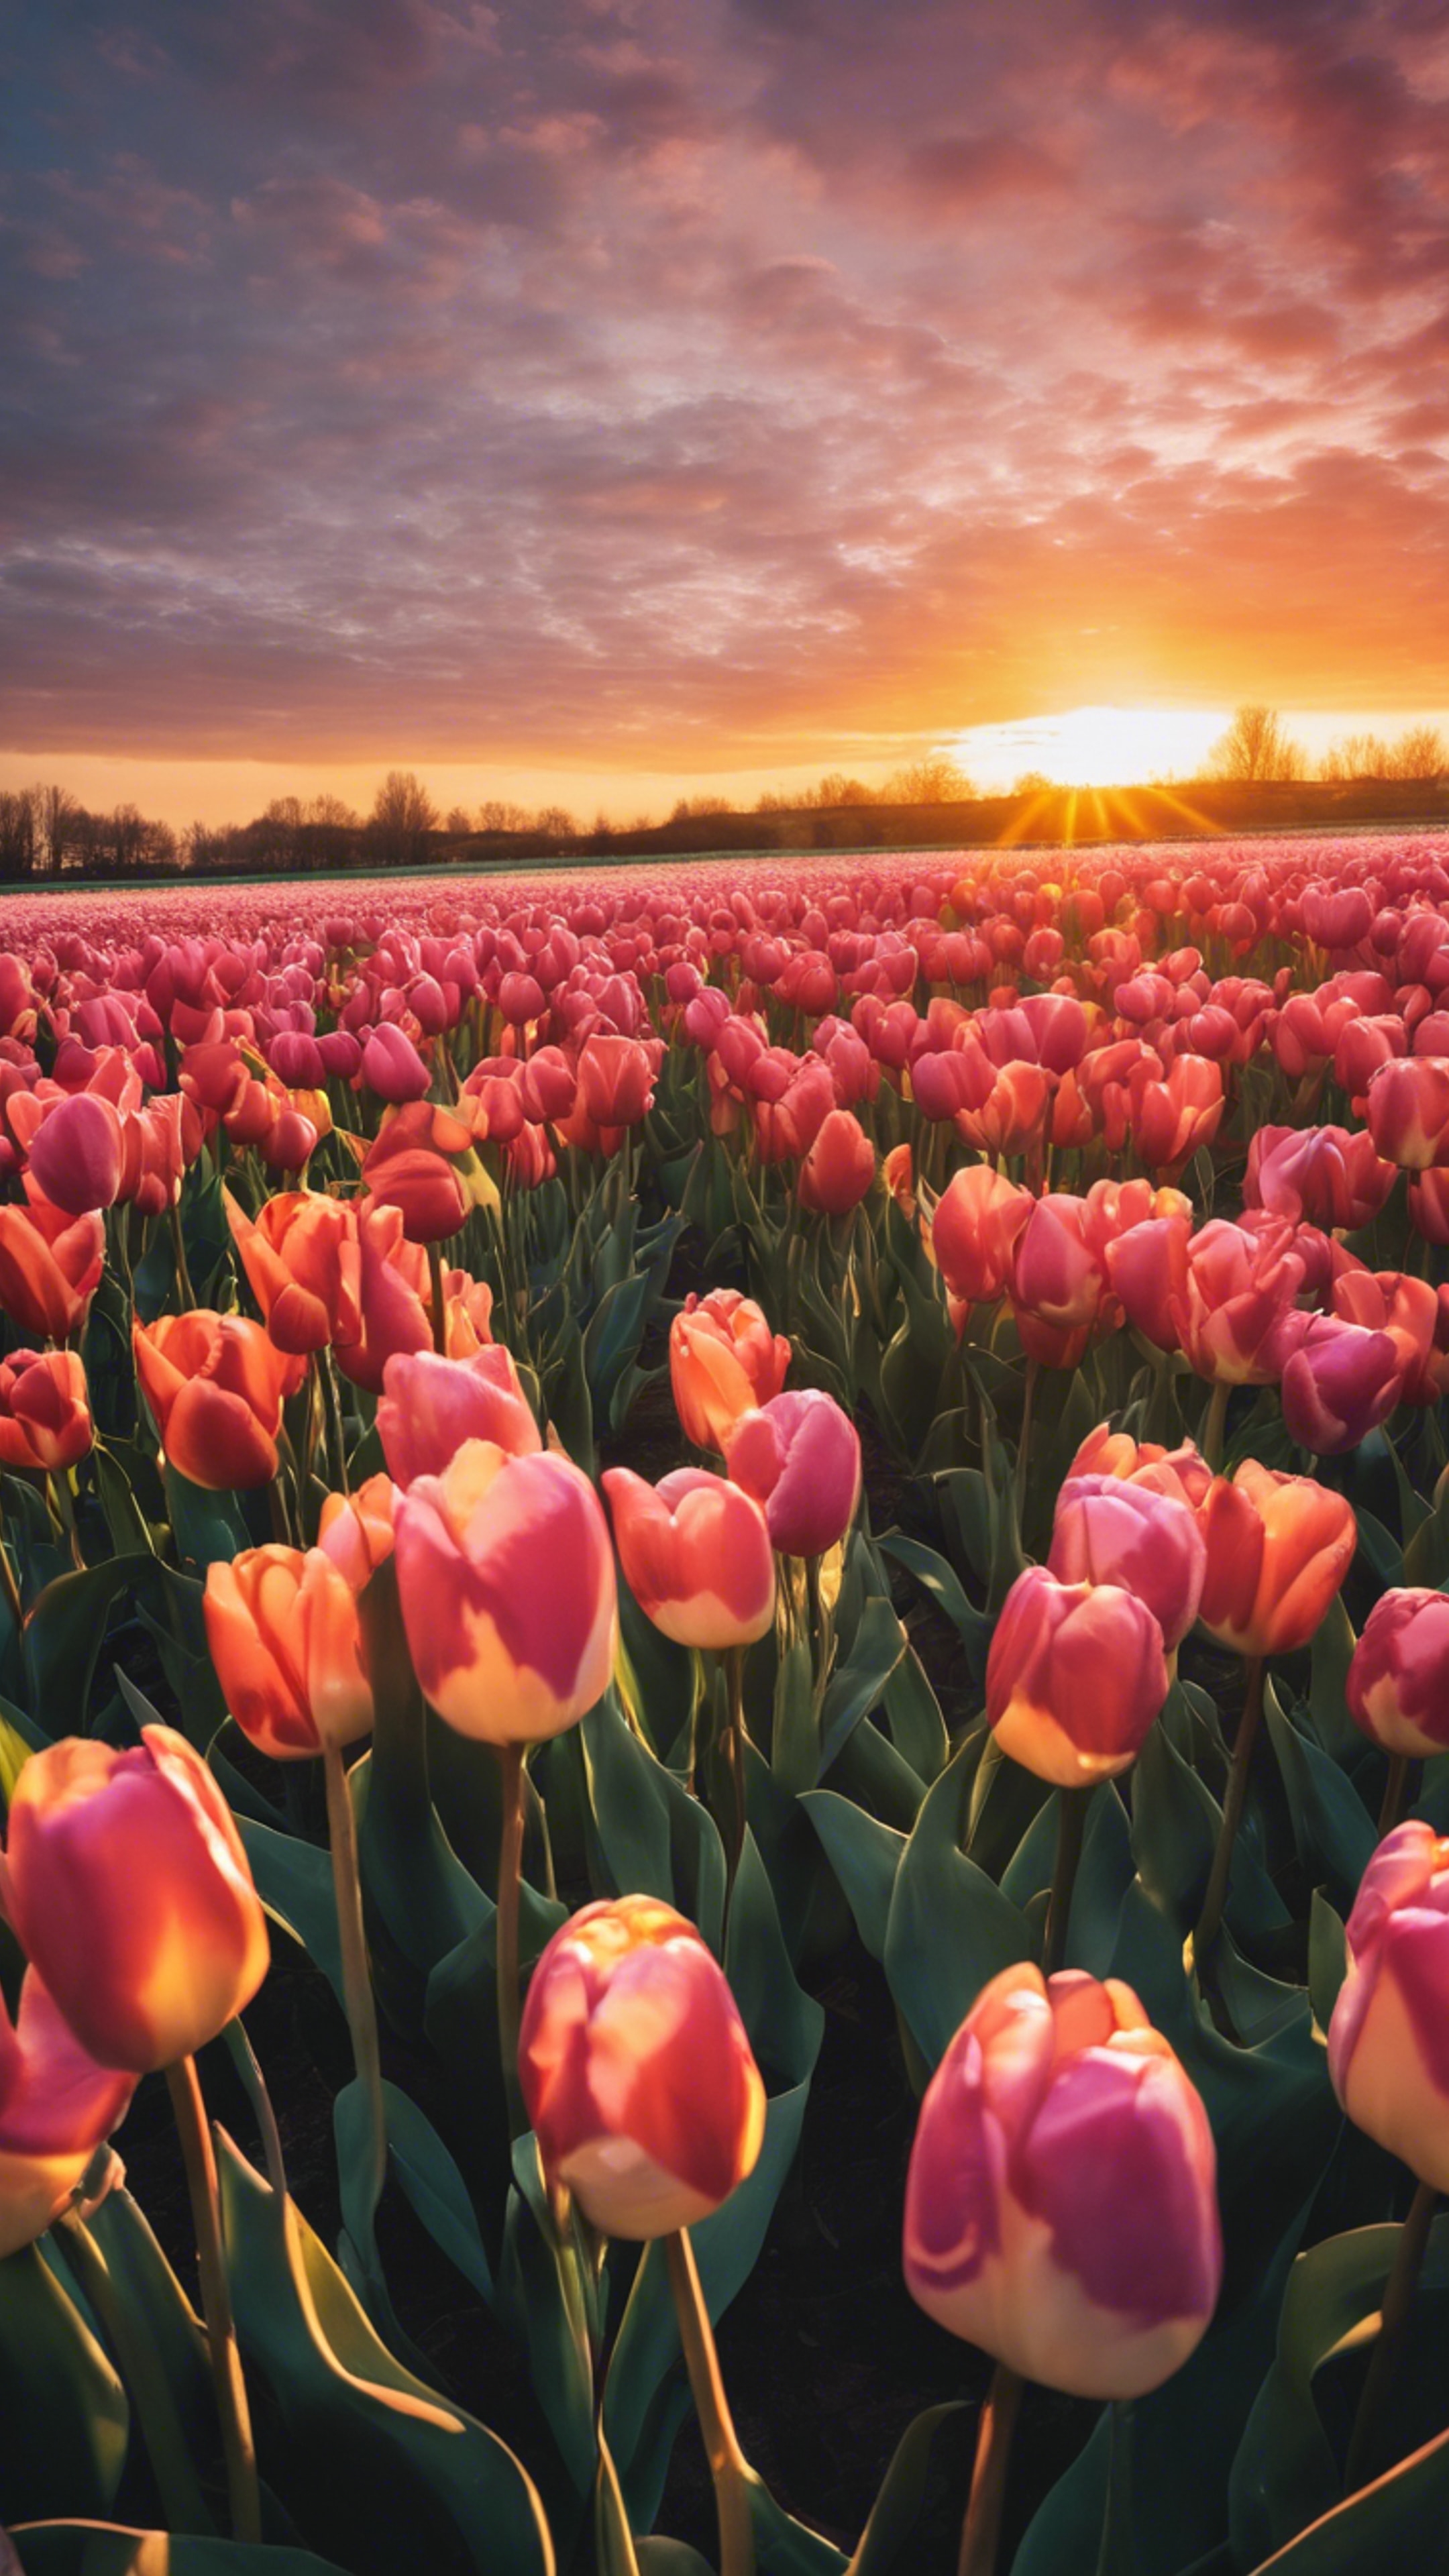 A beautiful sunset setting seen through a prism of tulips. Wallpaper[f8f049e47b844ba1a438]